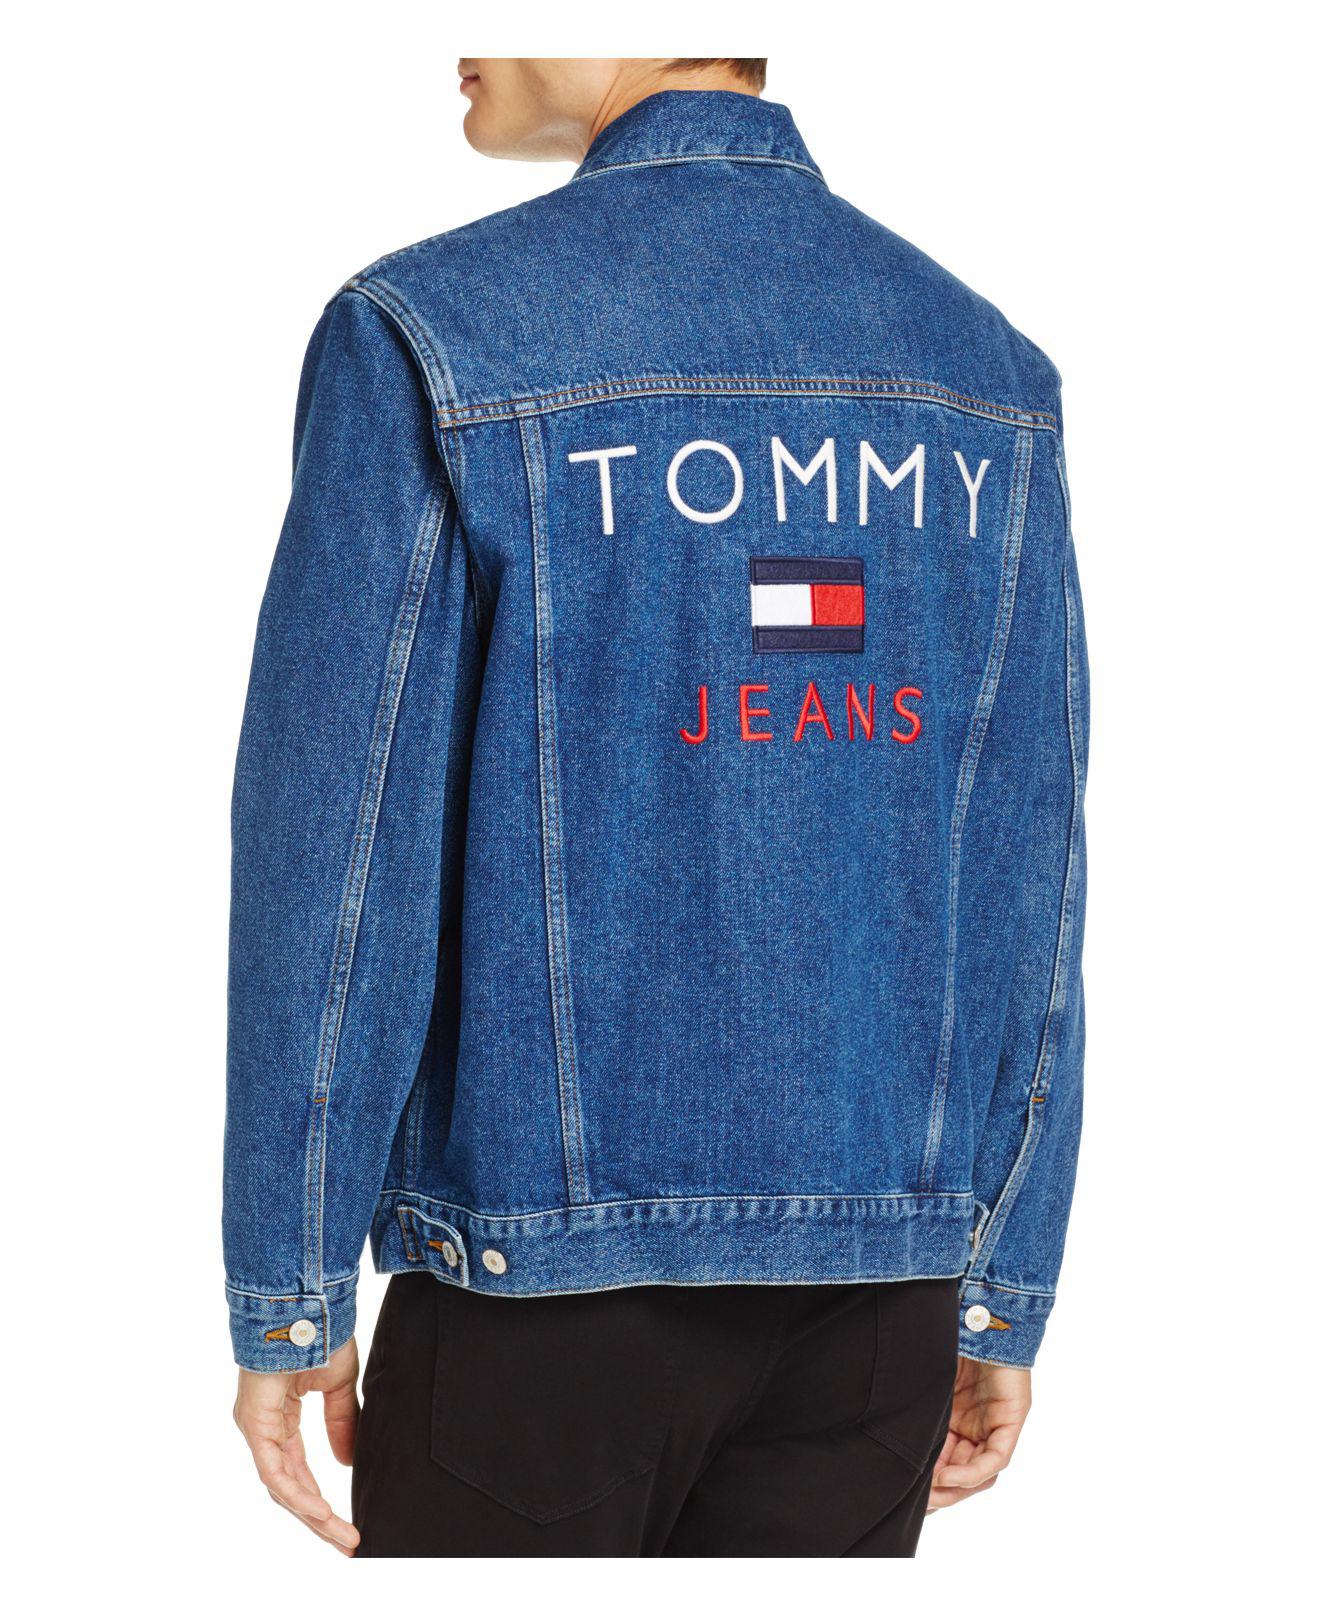 Charmant Eerbetoon Gedeeltelijk Tommy Hilfiger Tommy Jeans 90's Denim Jacket in Blue | Lyst